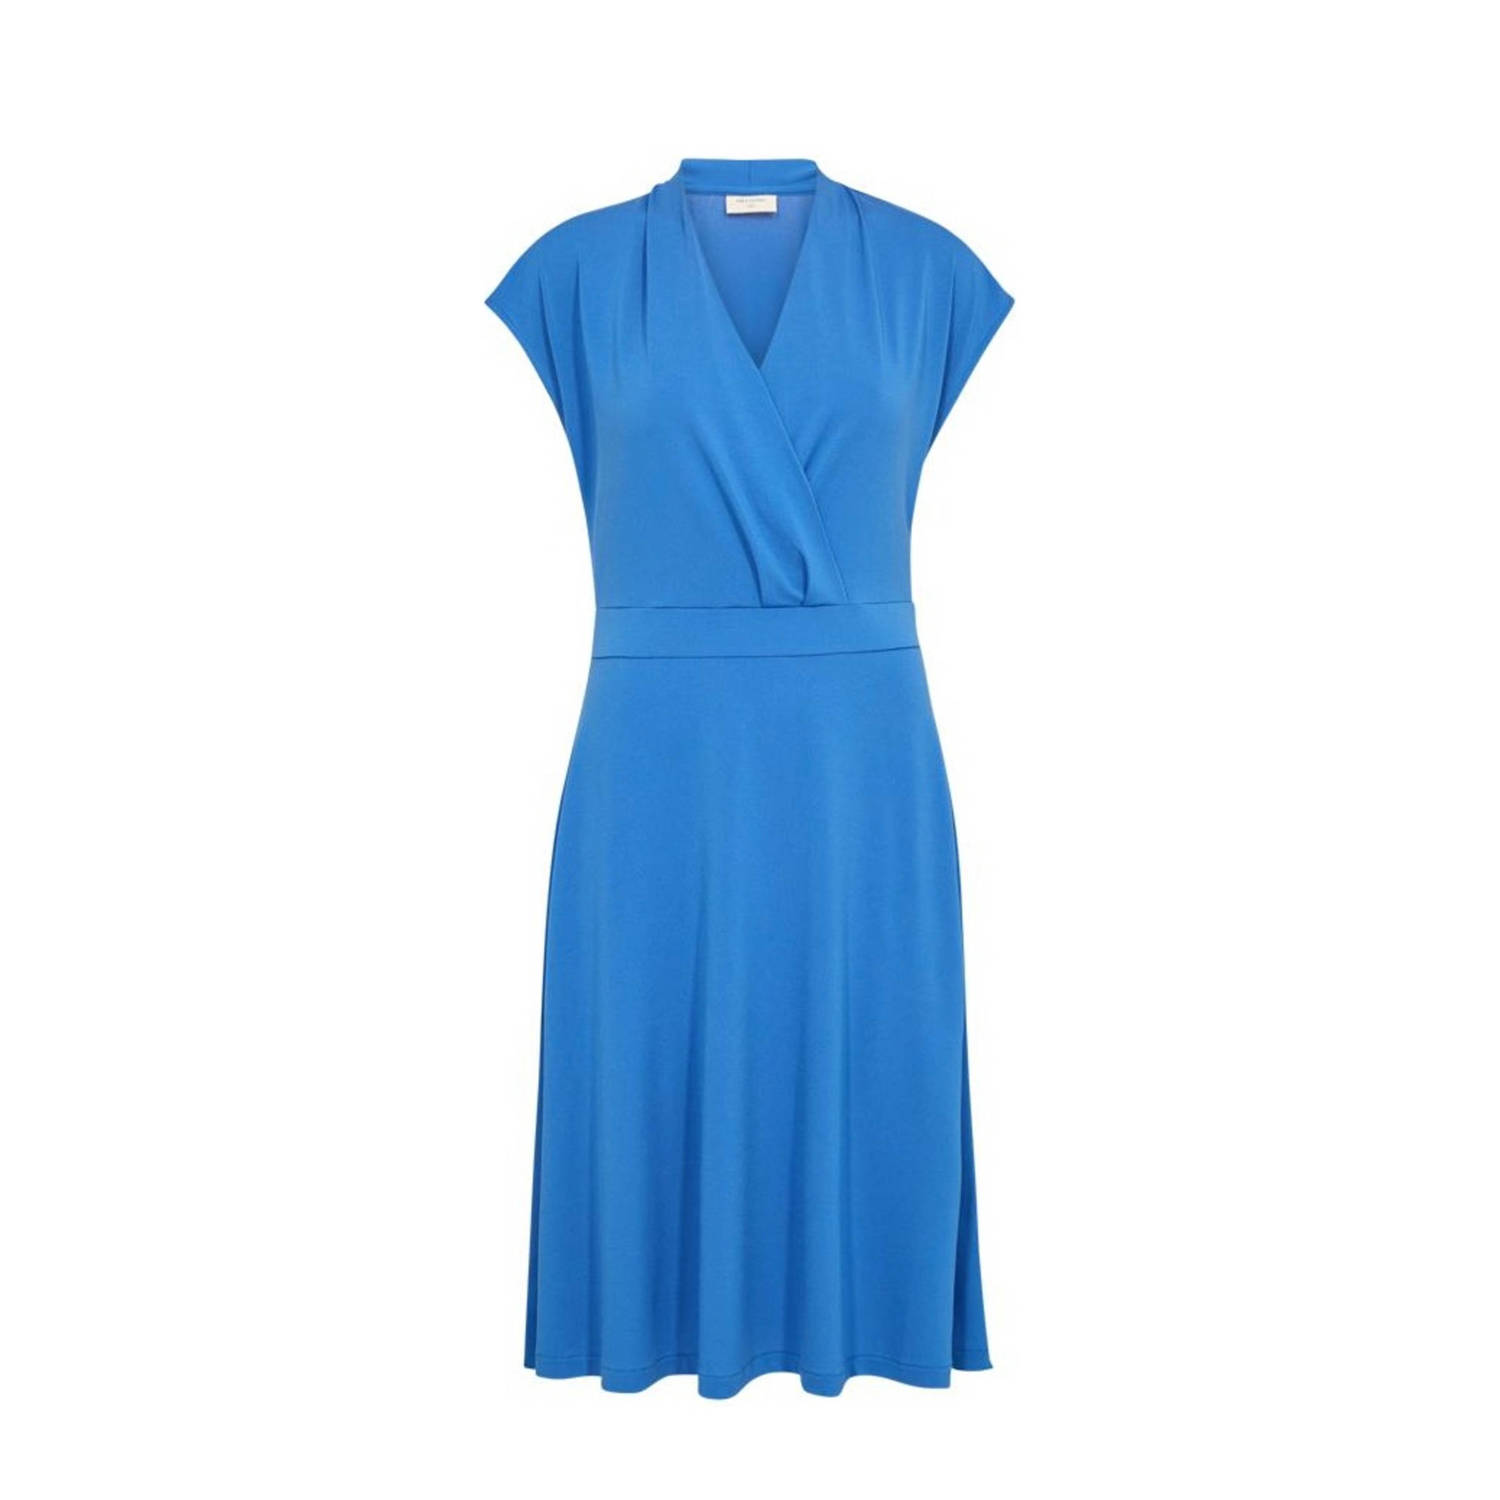 FREEQUENT jurk FQYRSA blauw